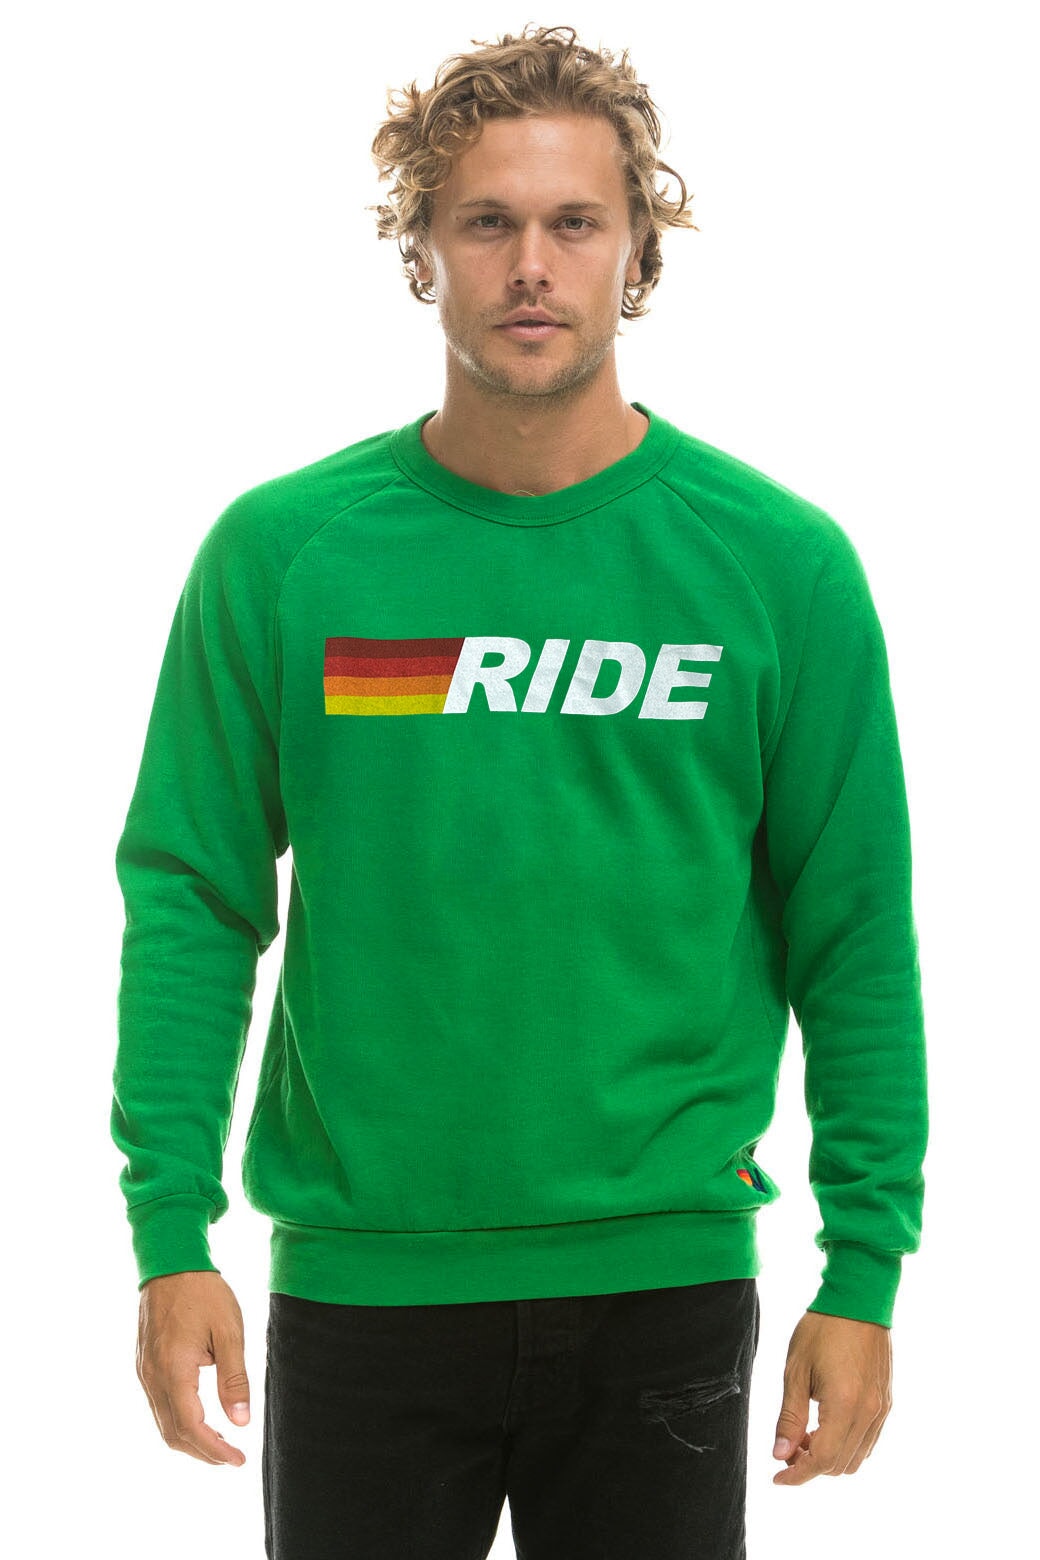 RIDE LOGO WHITE CREW SWEATSHIRT - KELLY GREEN Sweatshirt Aviator Nation 